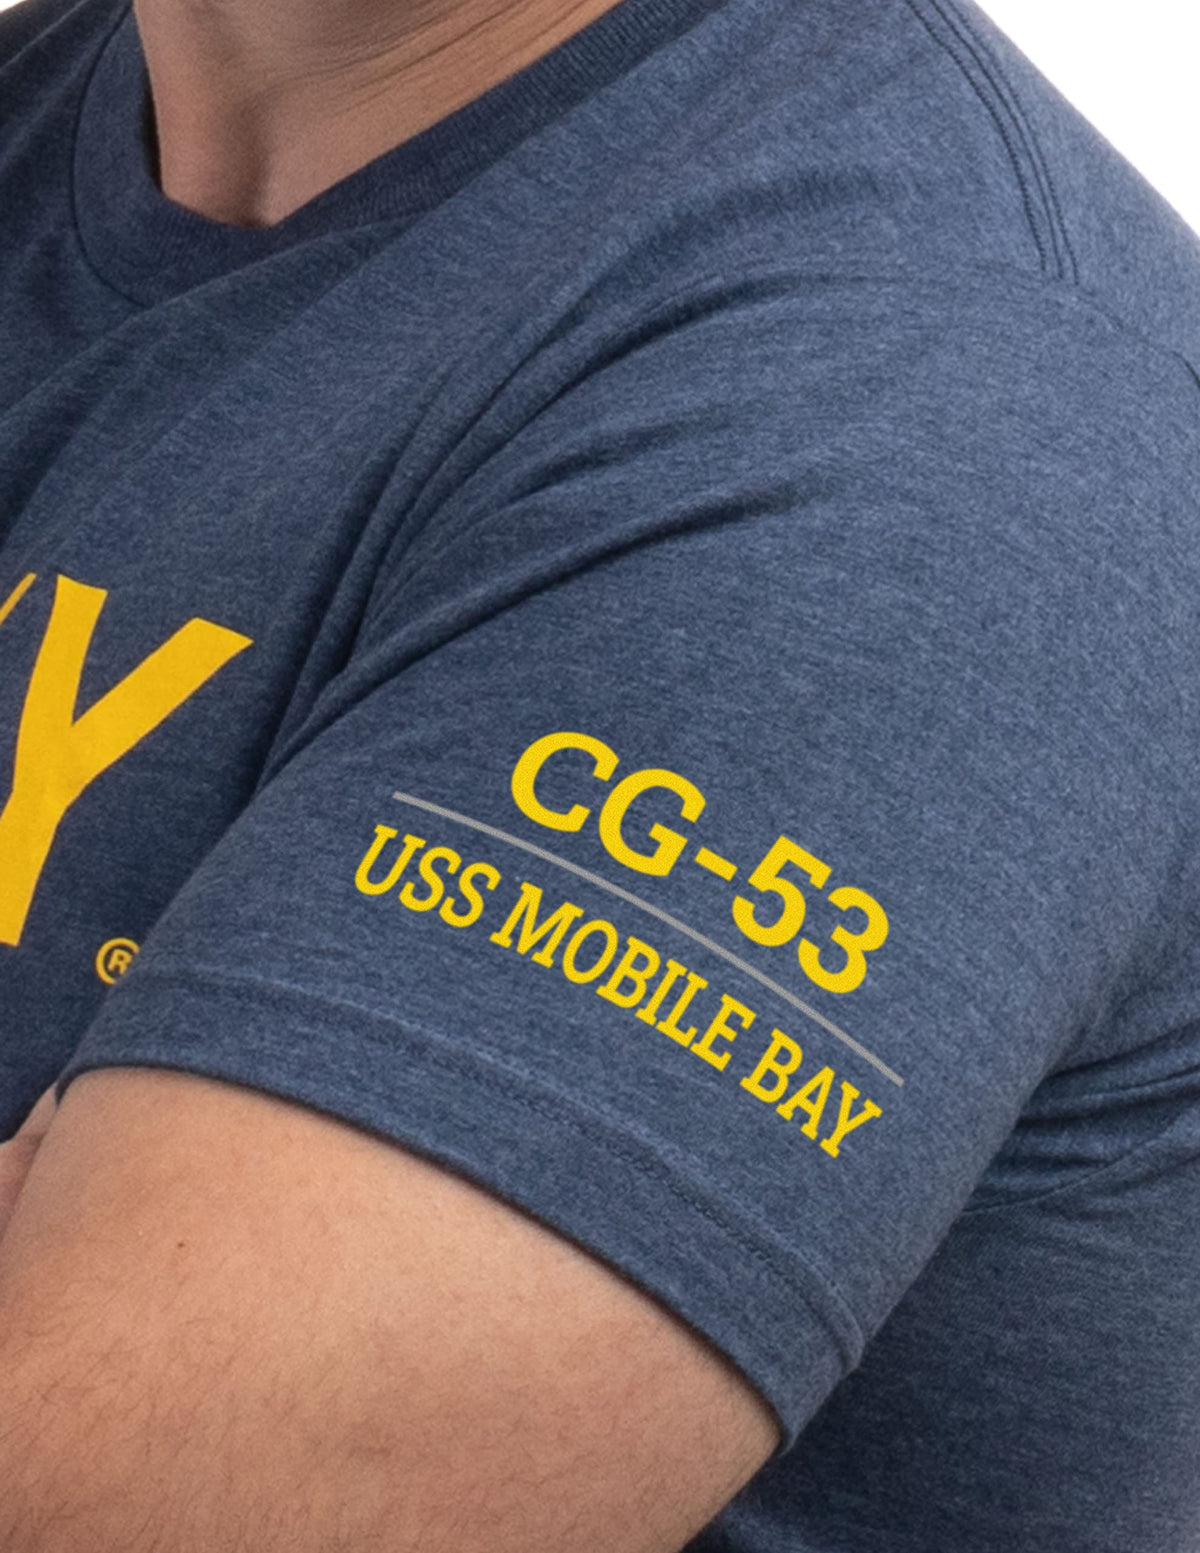 USS Mobile Bay, CG-53 | U.S. Navy Sailor Veteran USN United States Naval T-shirt for Men Women